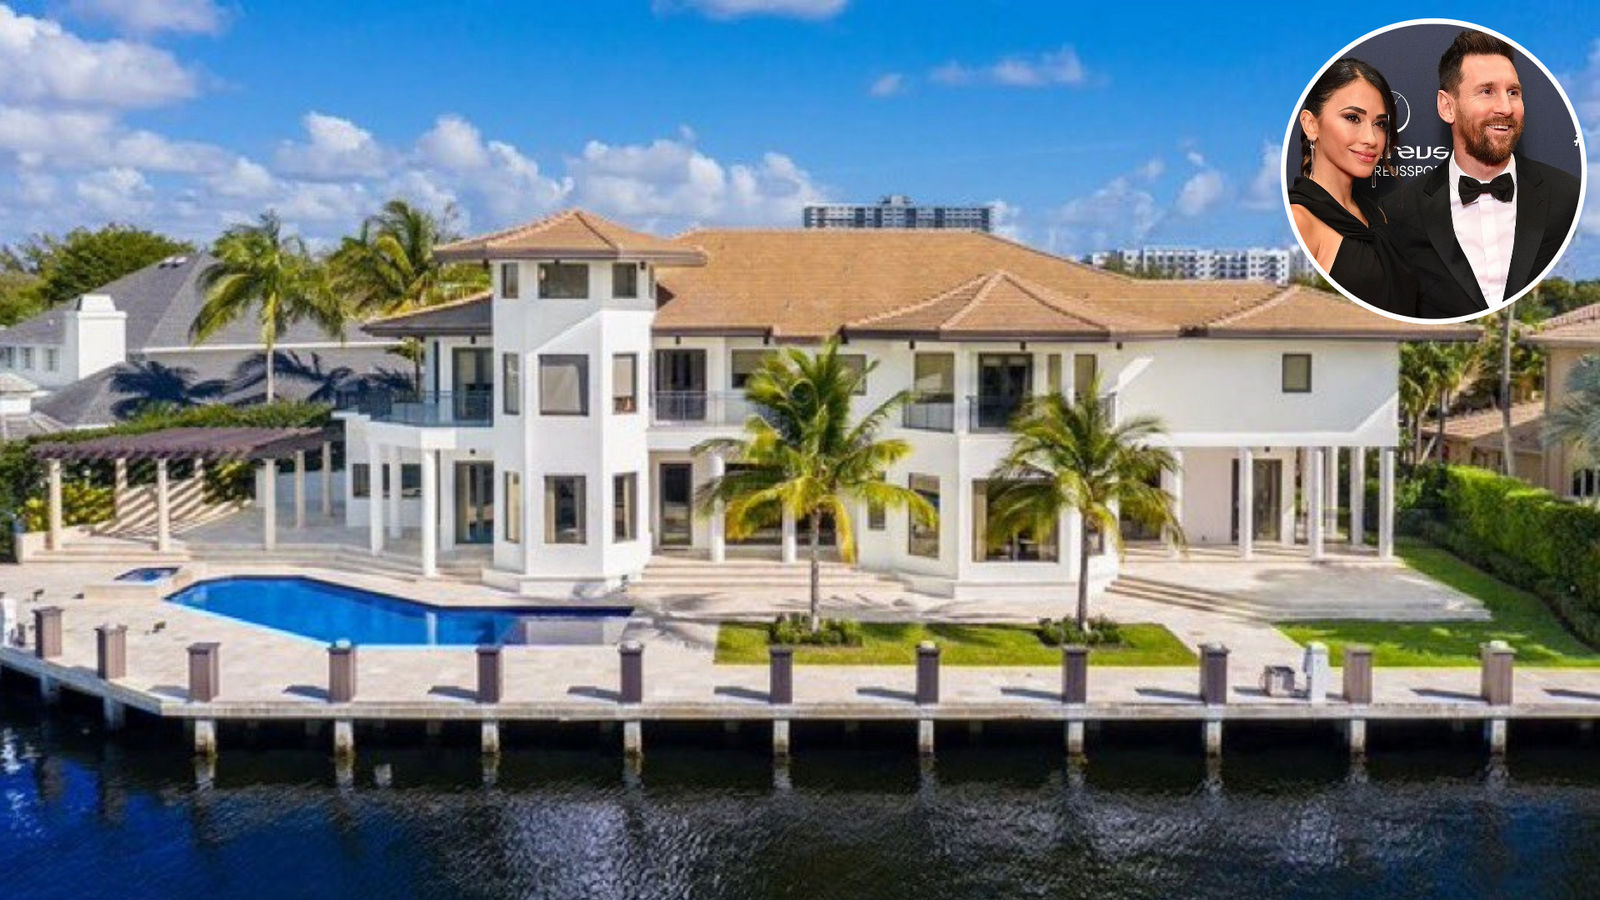 New Luxurious Villa Vuitton in Ft Lauderdale, Fort Lauderdale